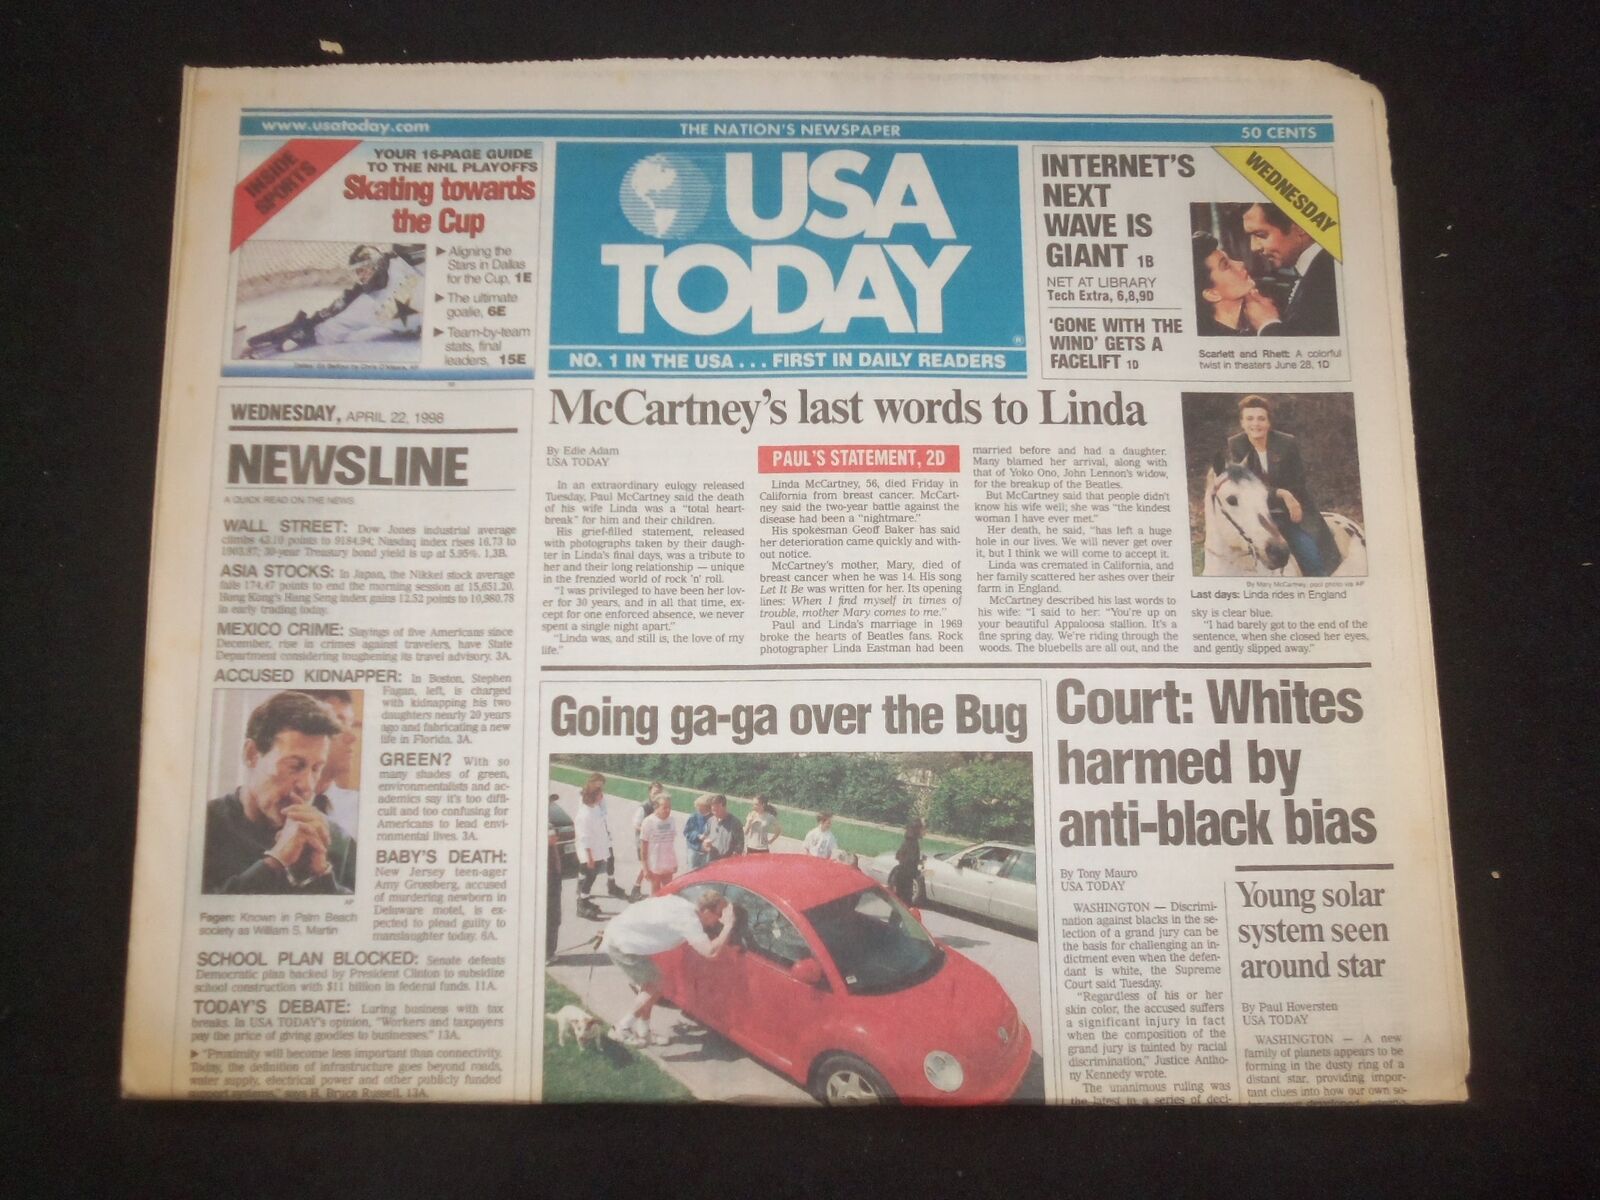 1998 APRIL 22 USA TODAY NEWSPAPER-PAUL MCCARTNEY'S LAST WORDS TO LINDA - NP 7917